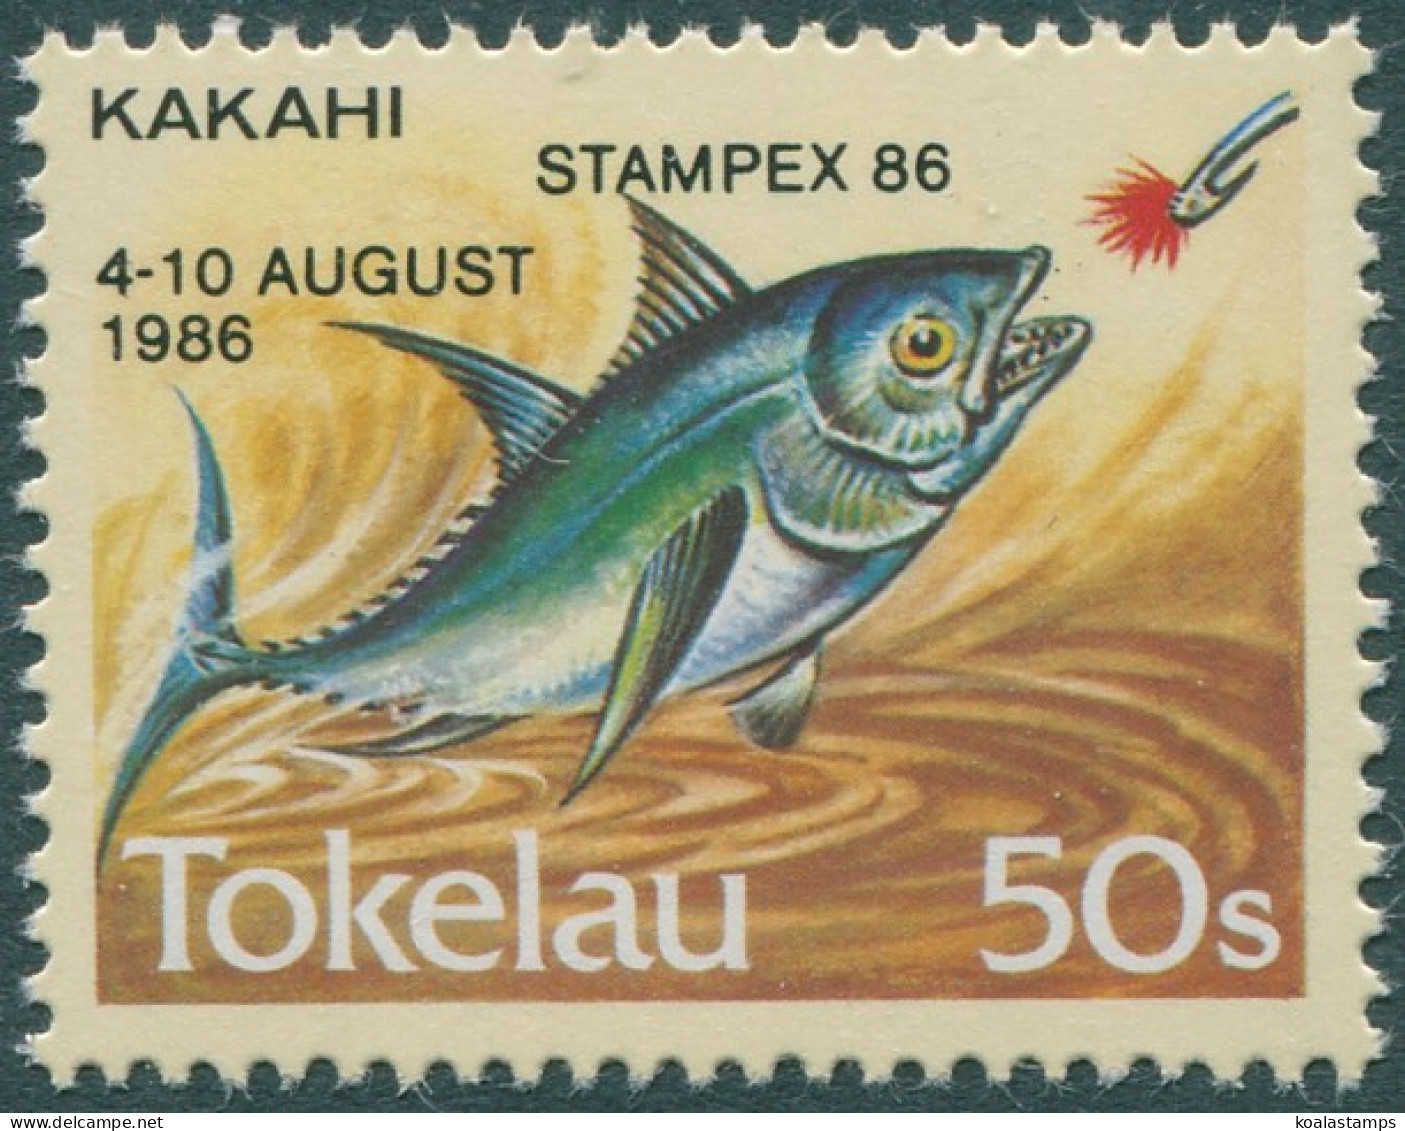 Tokelau 1986 SG114a 50s Fish Stampex Overprint MNH - Tokelau